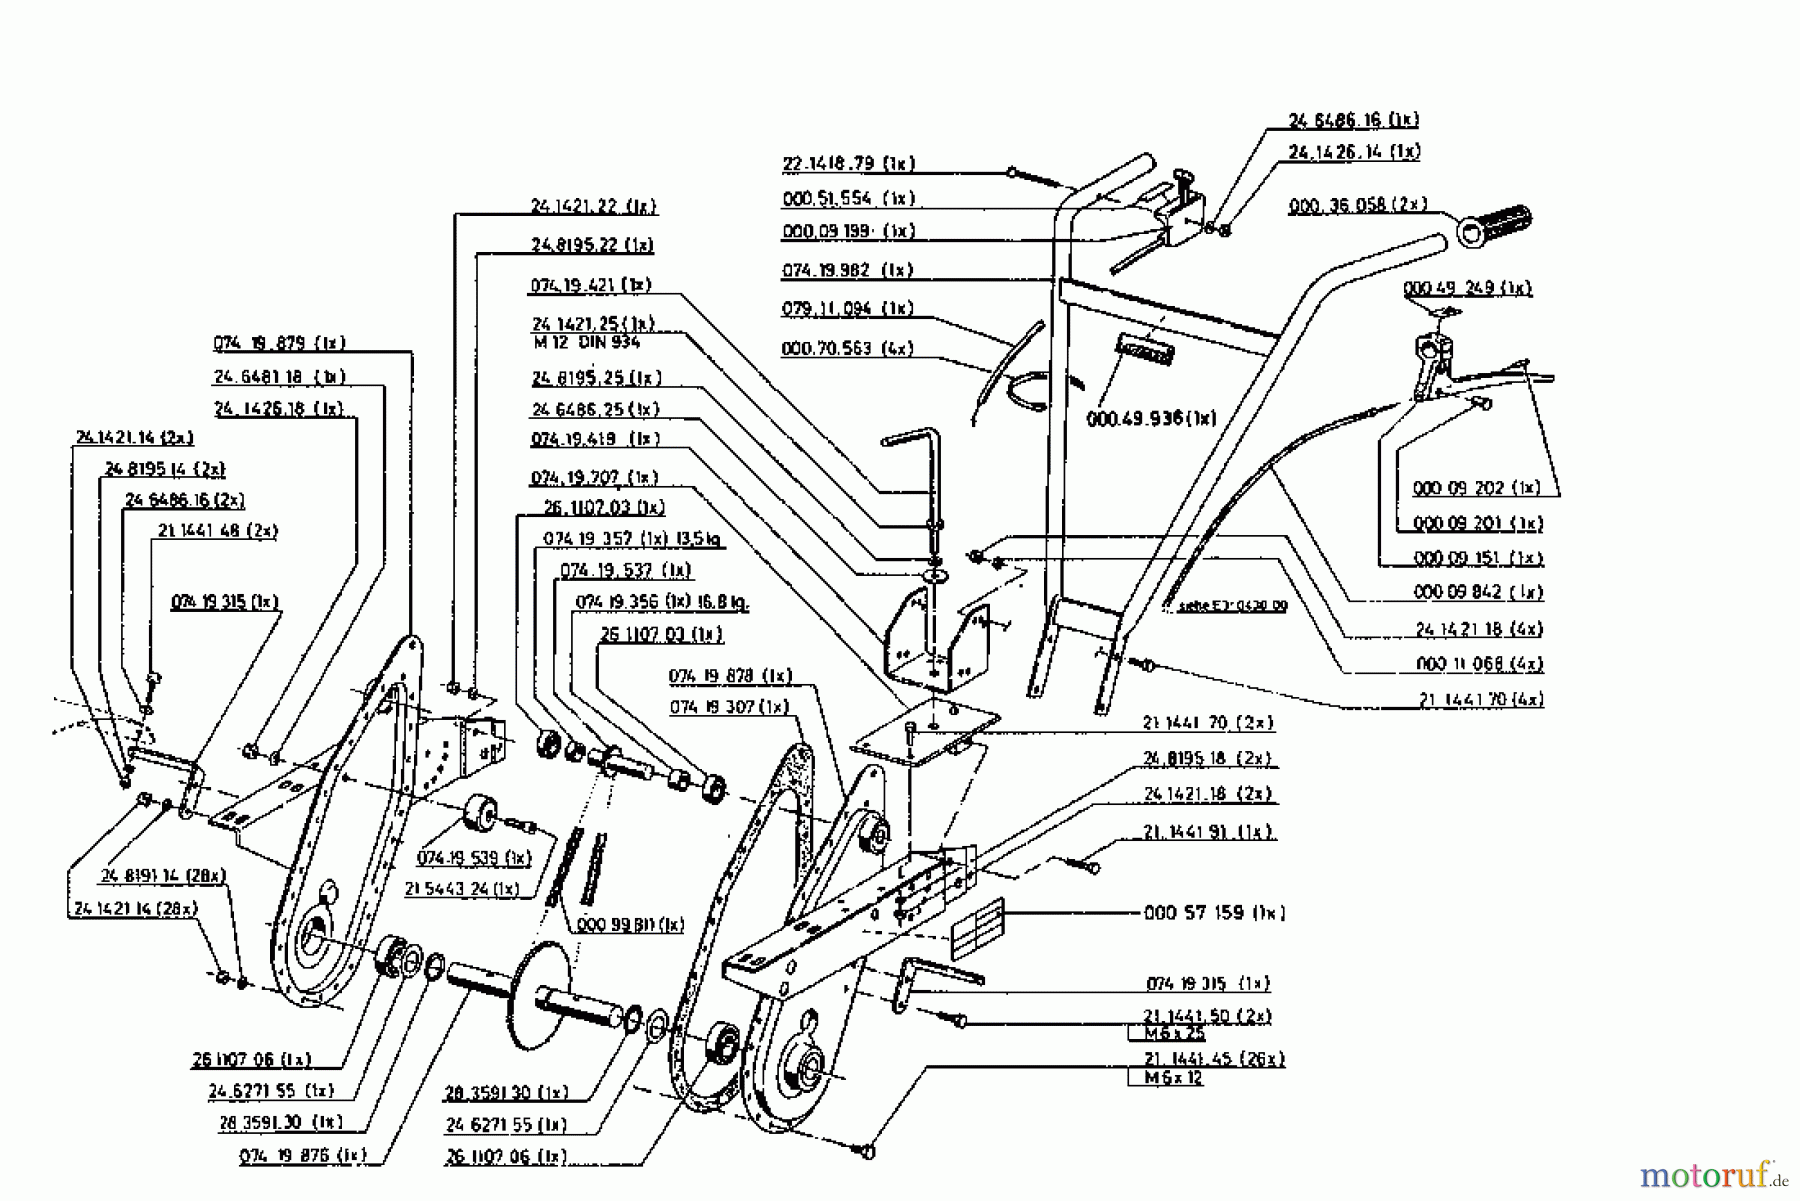  Gutbrod Tillers MB 62-35 07518.05  (1996) Basic machine